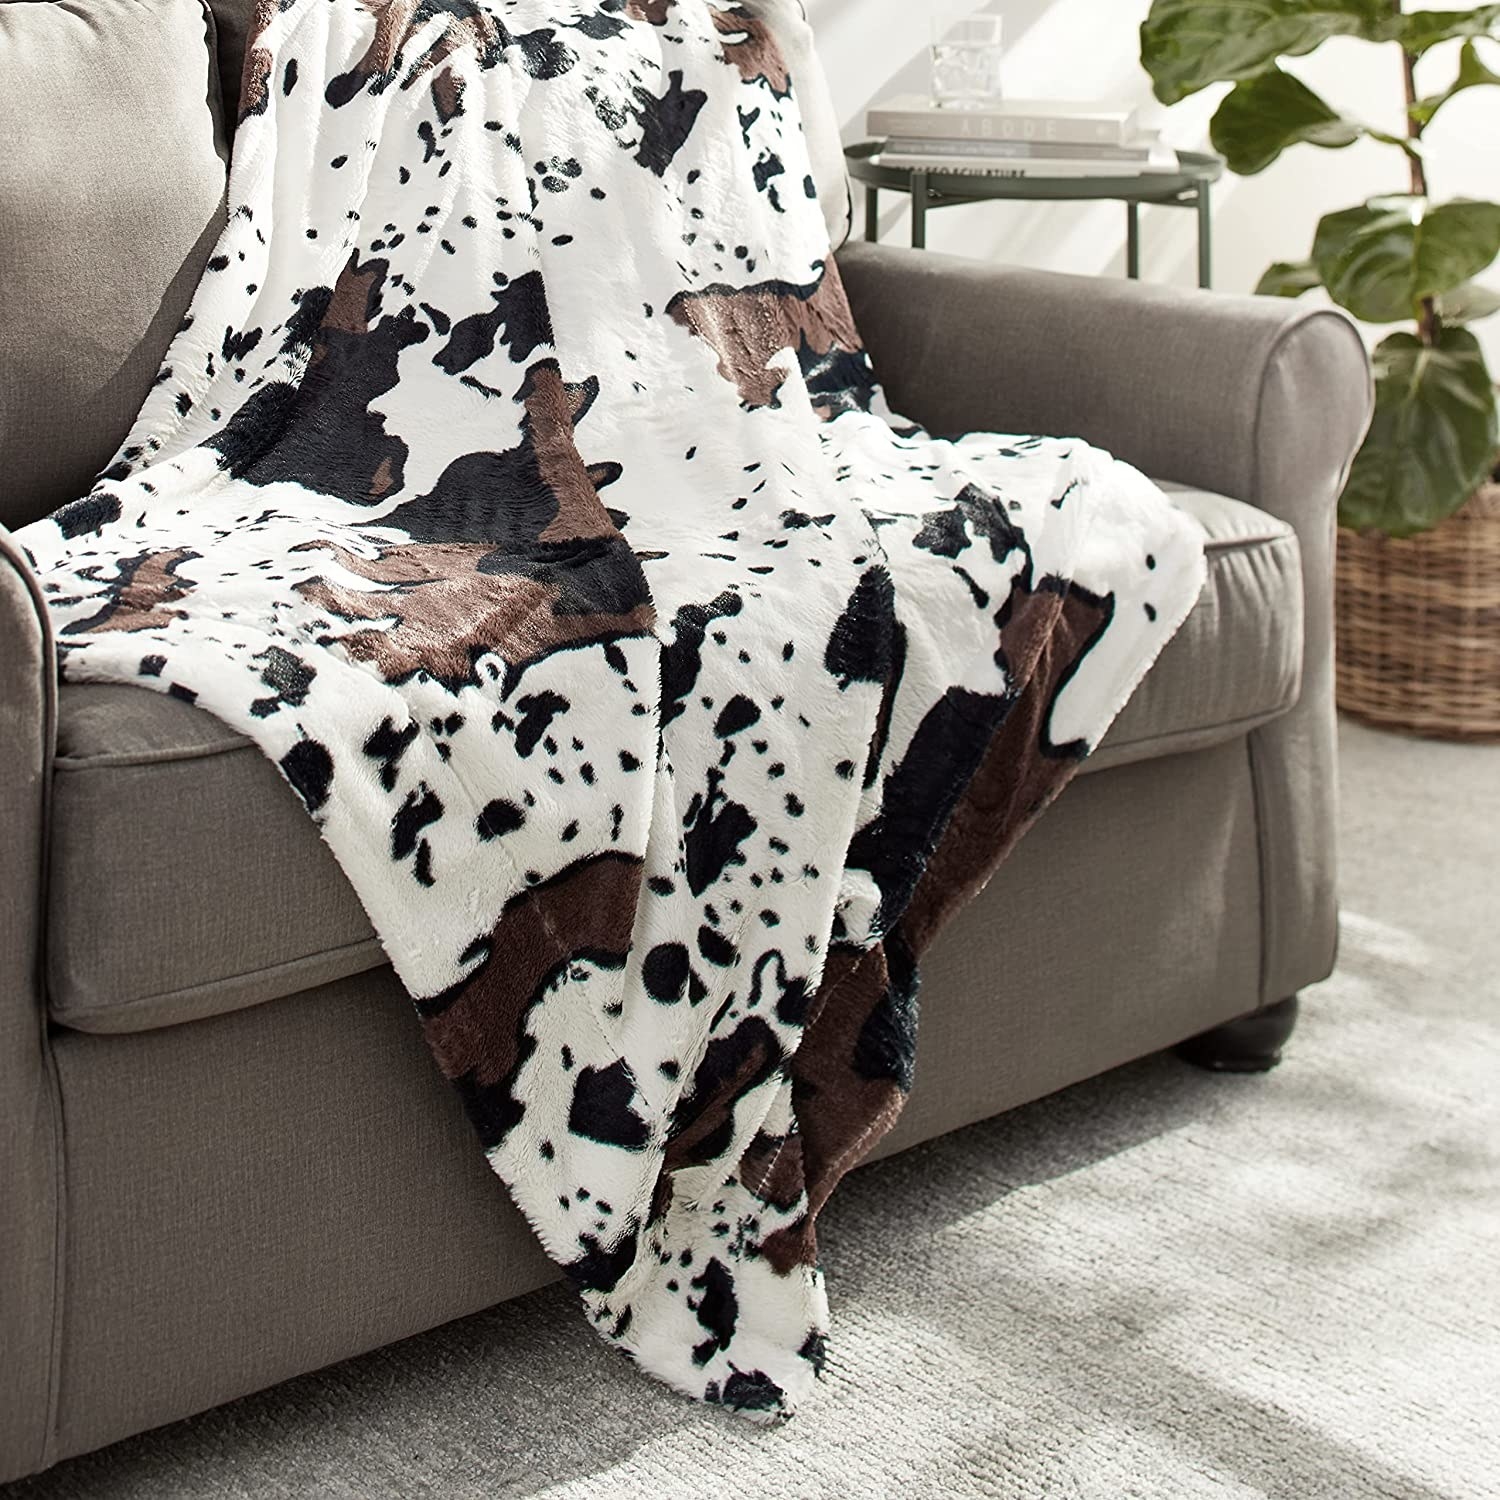 a cow print blanket slung onto the arm of a sofa